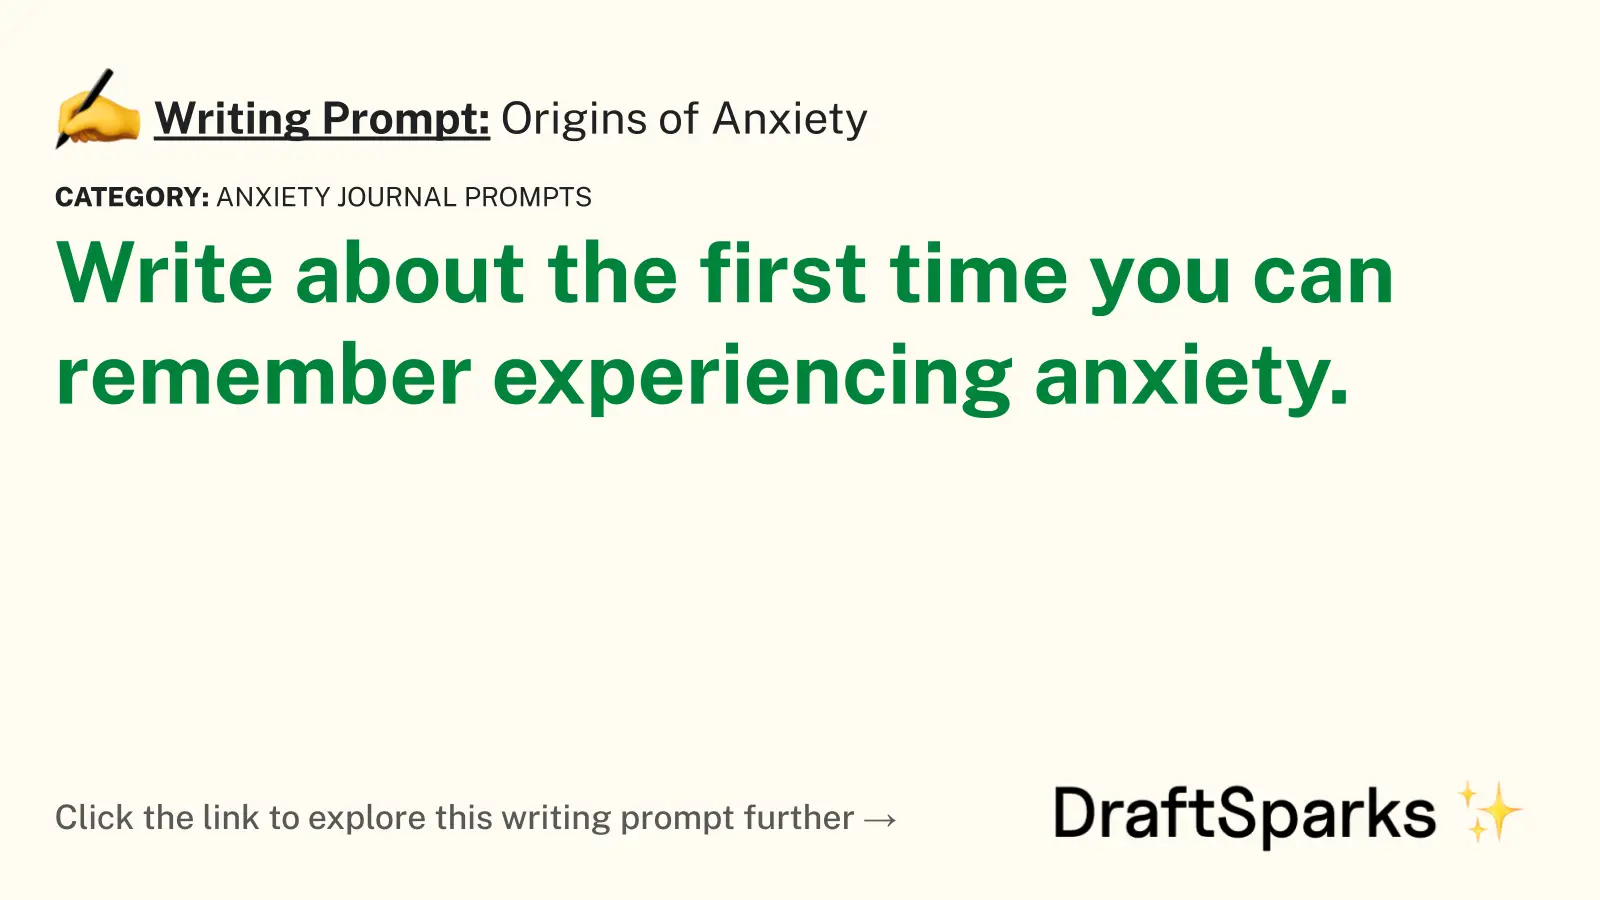 Origins of Anxiety